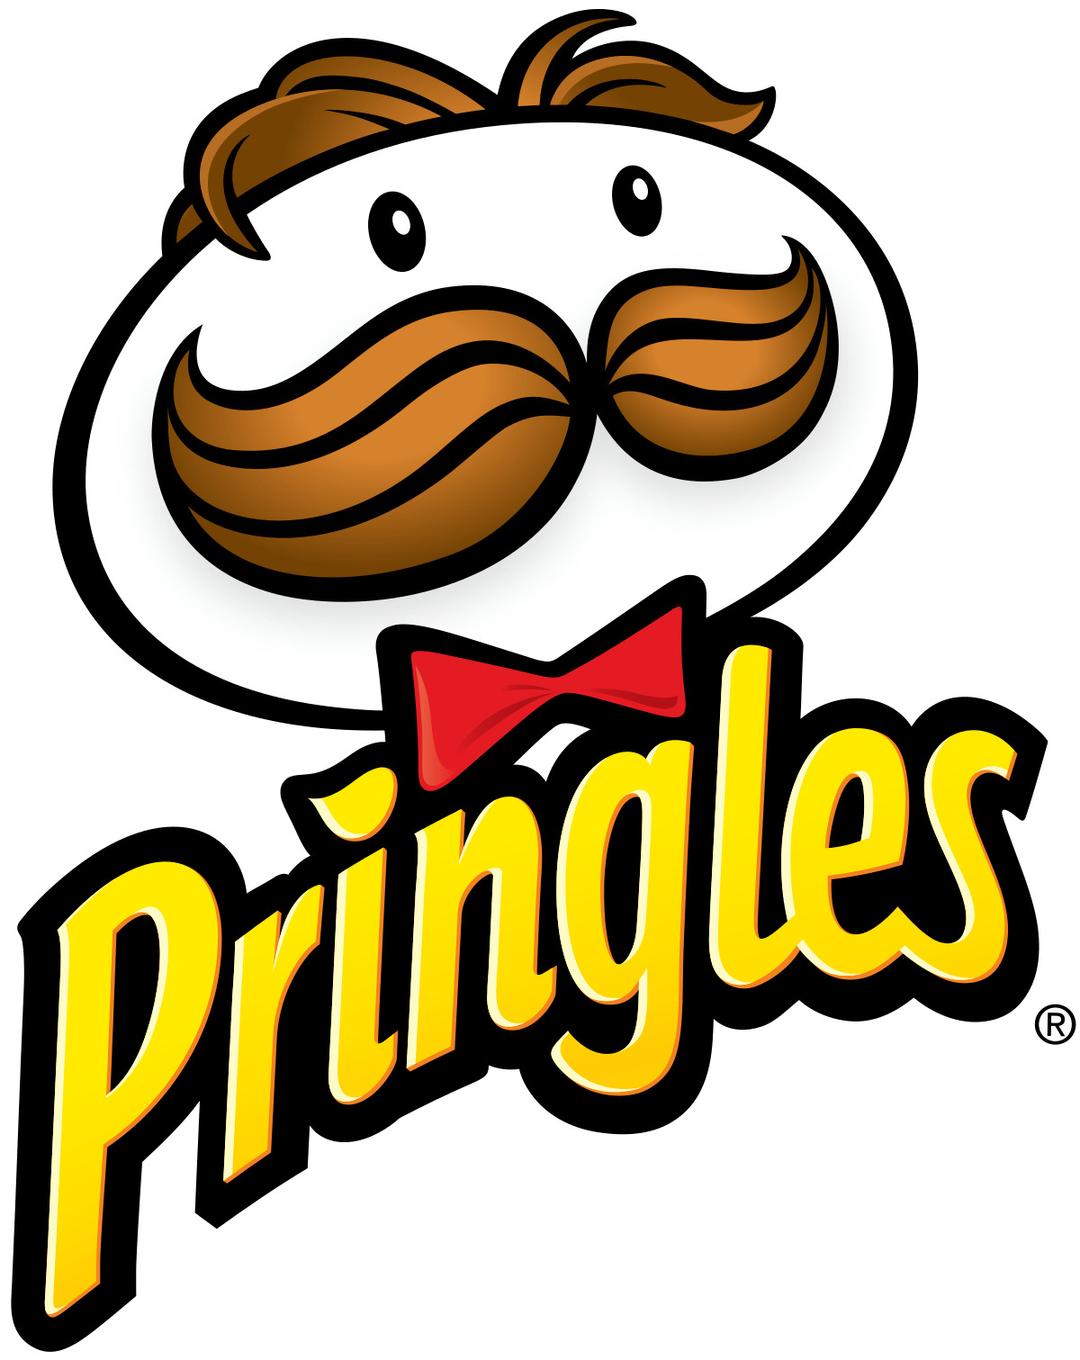 Pringles Logo png transparent